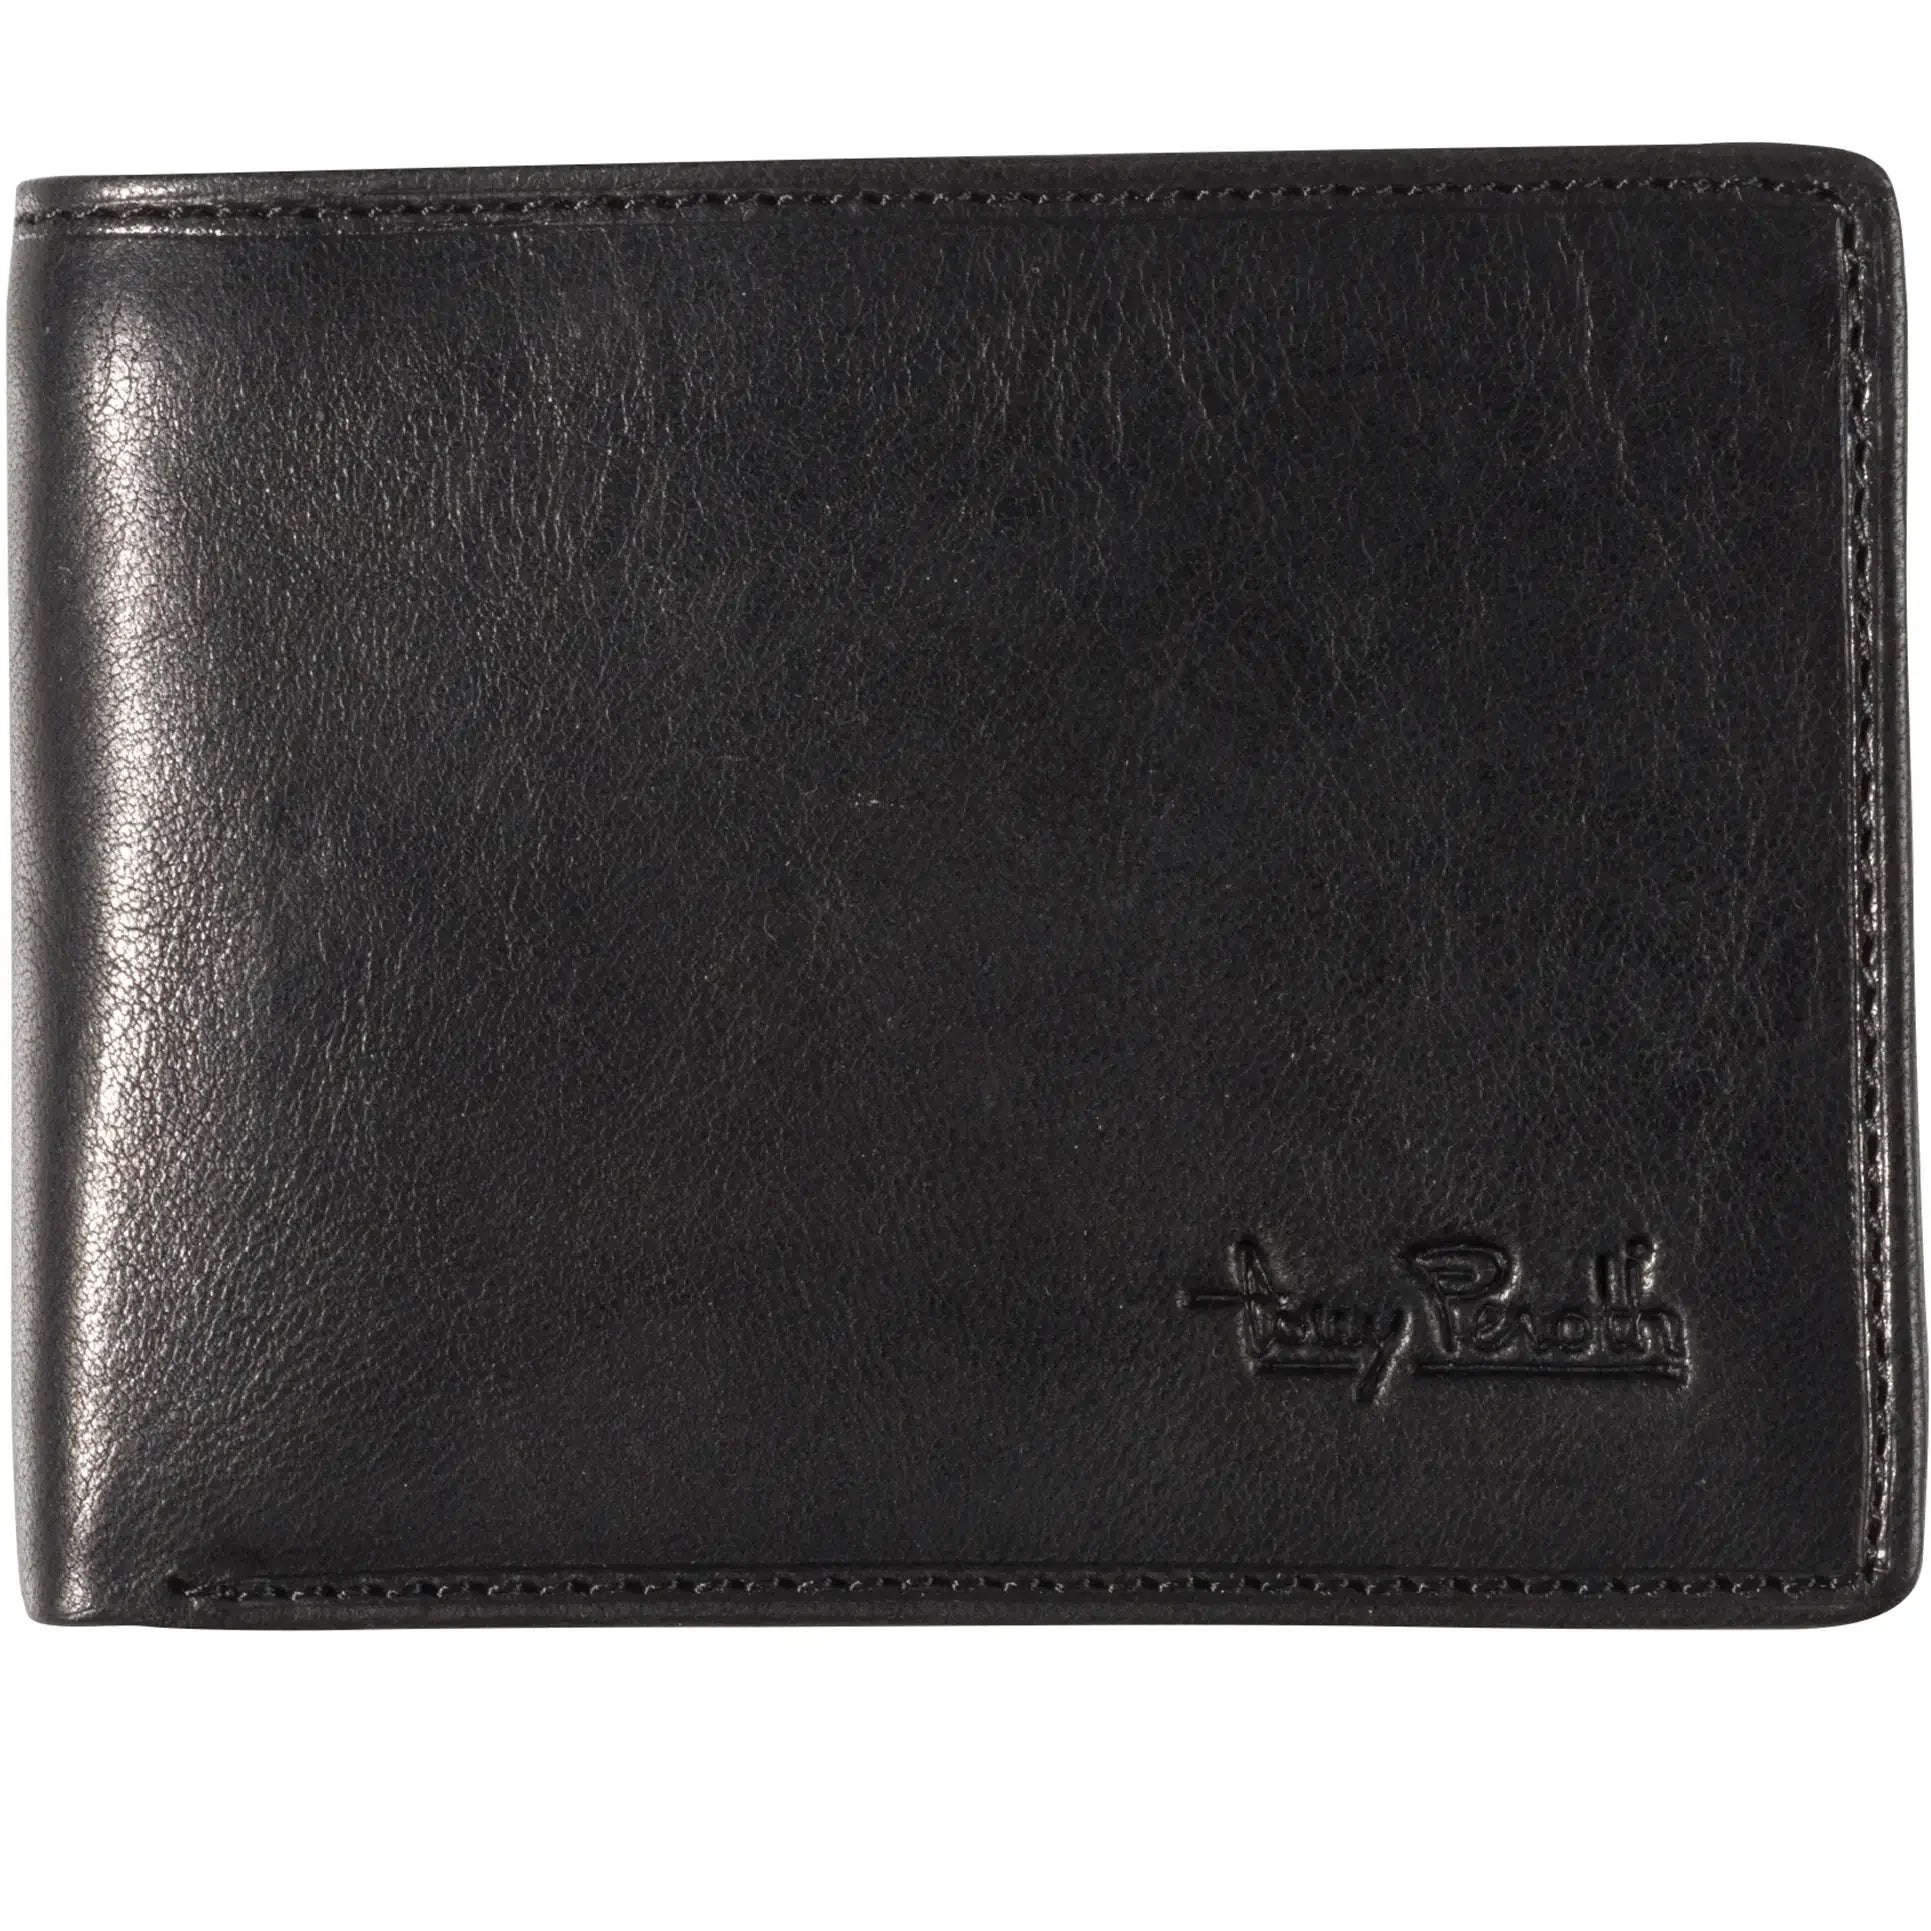 Tony Perotti Furbo wallet 11 cm - Black